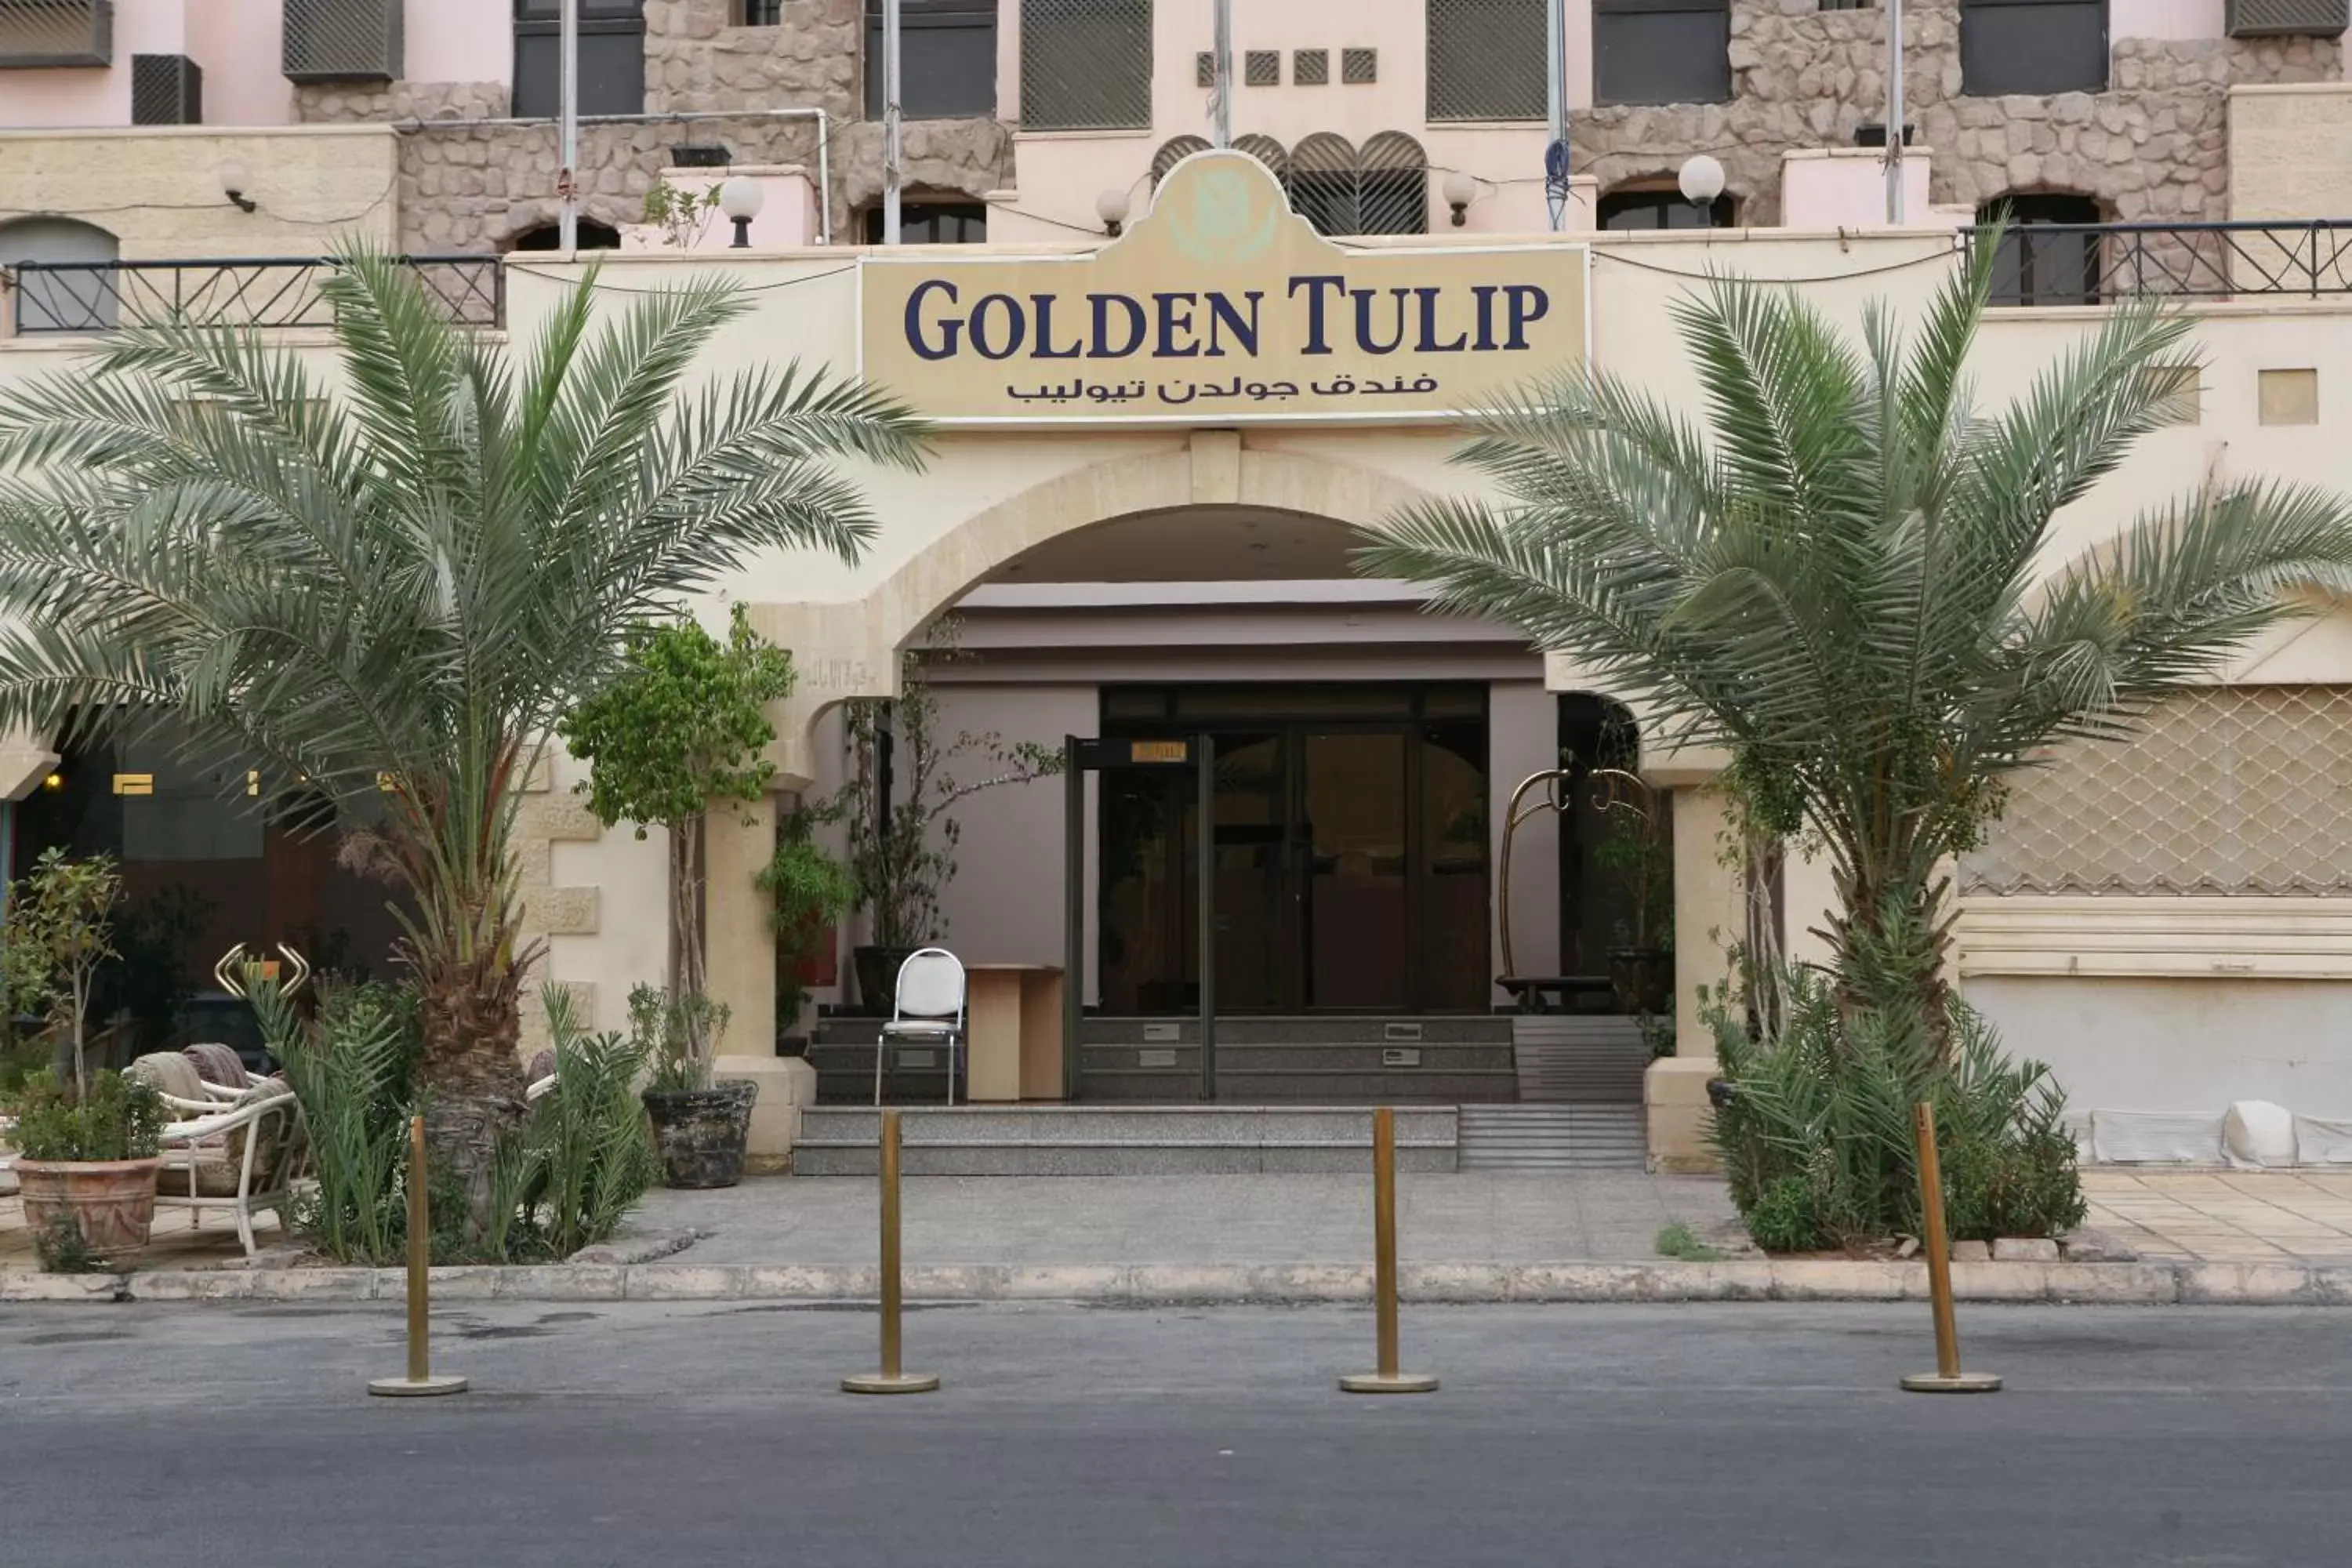 Area and facilities in Golden Tulip Aqaba